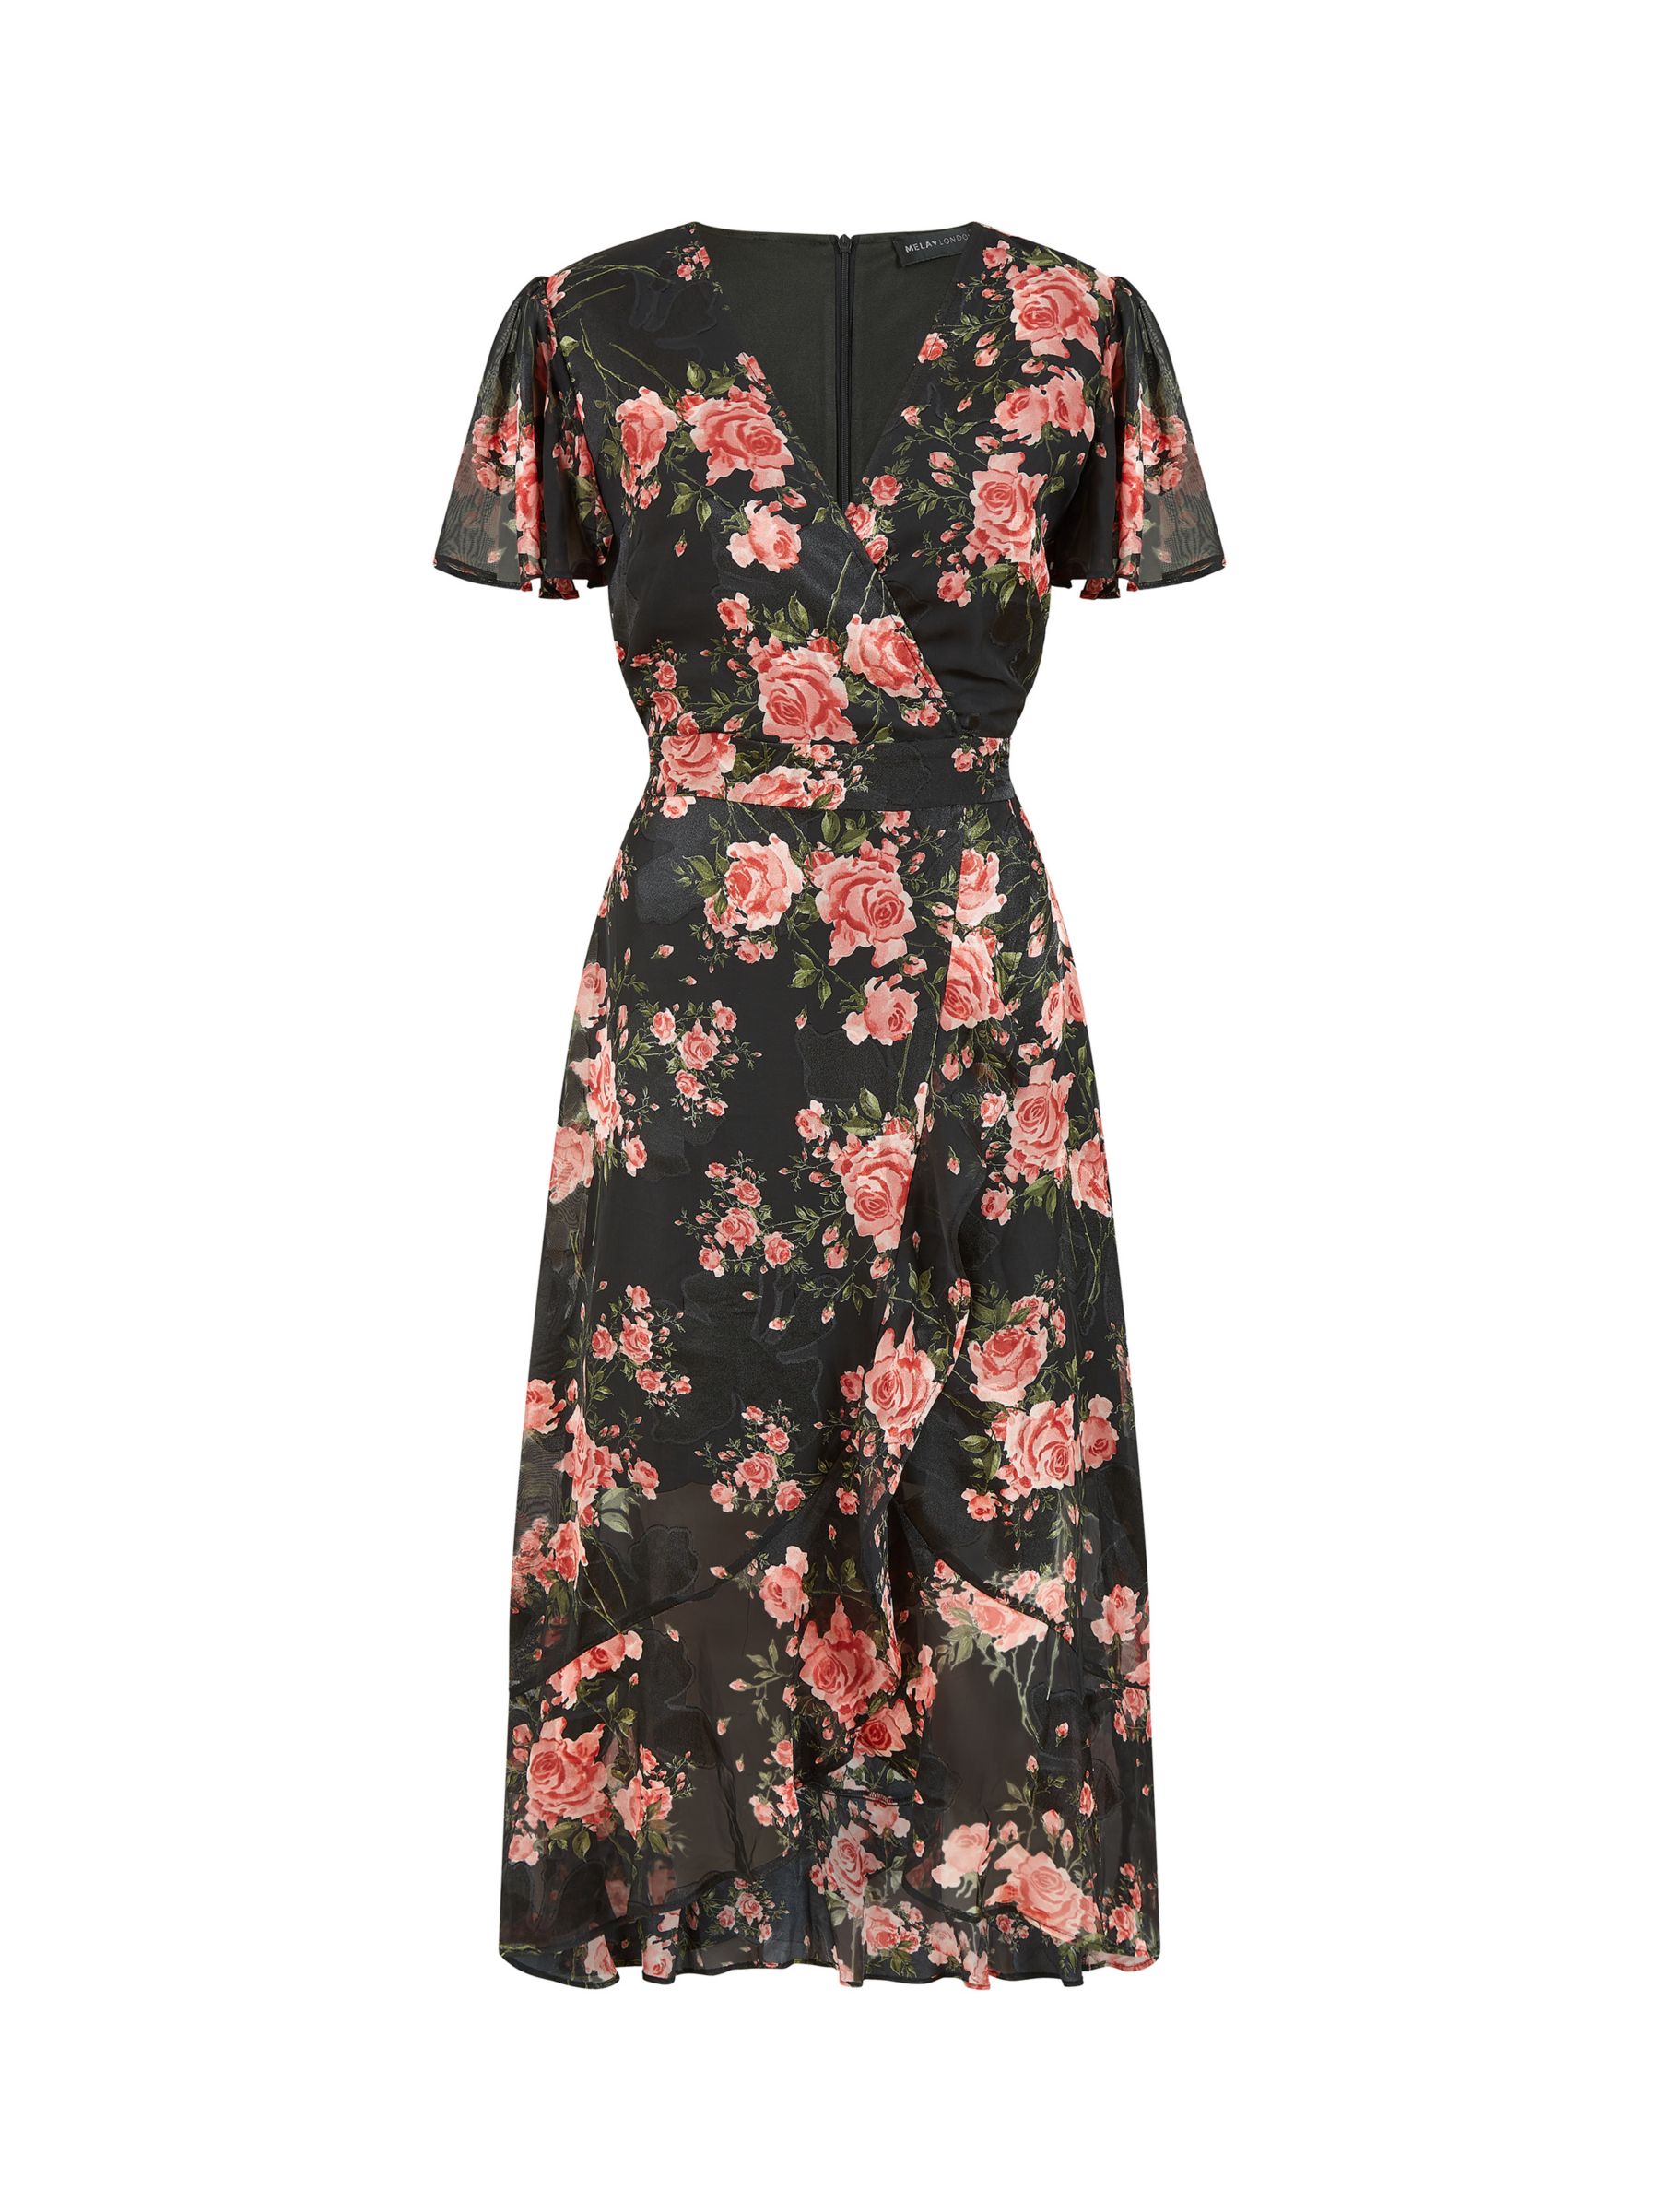 Mela London Rose Print Midi Dress, Black at John Lewis & Partners